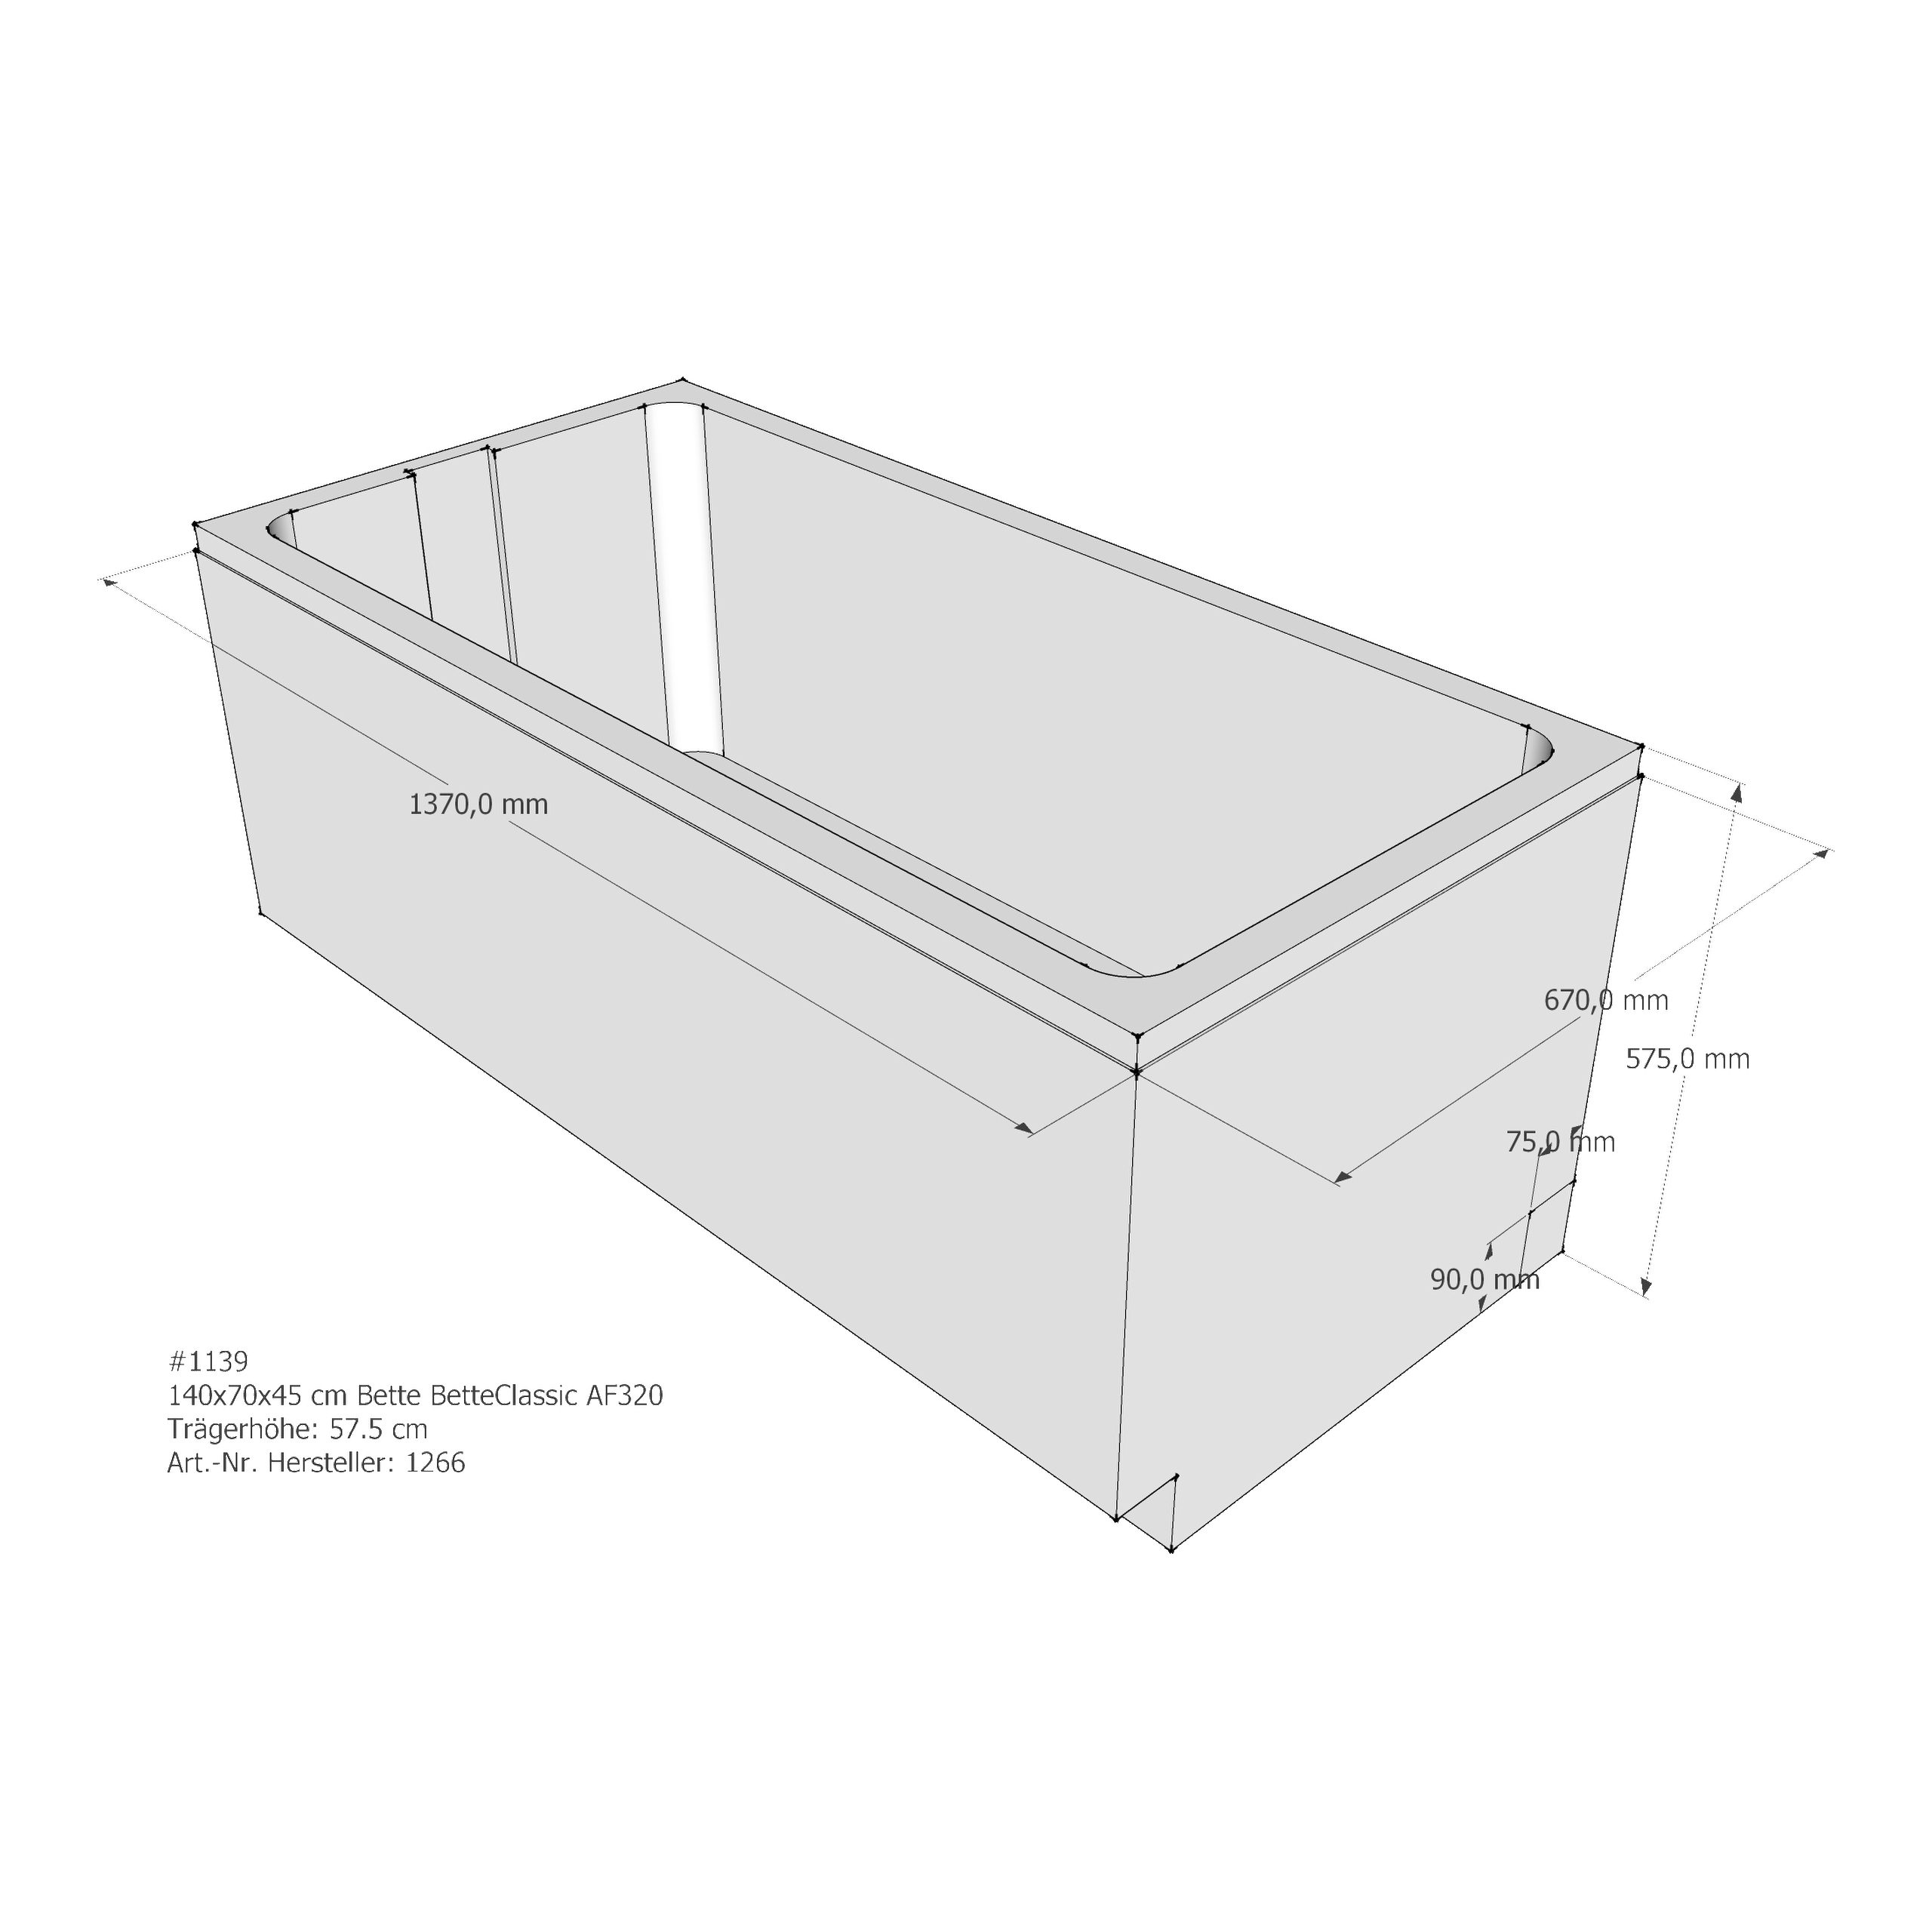 Badewannenträger für Bette BetteClassic 140 × 70 × 45 cm